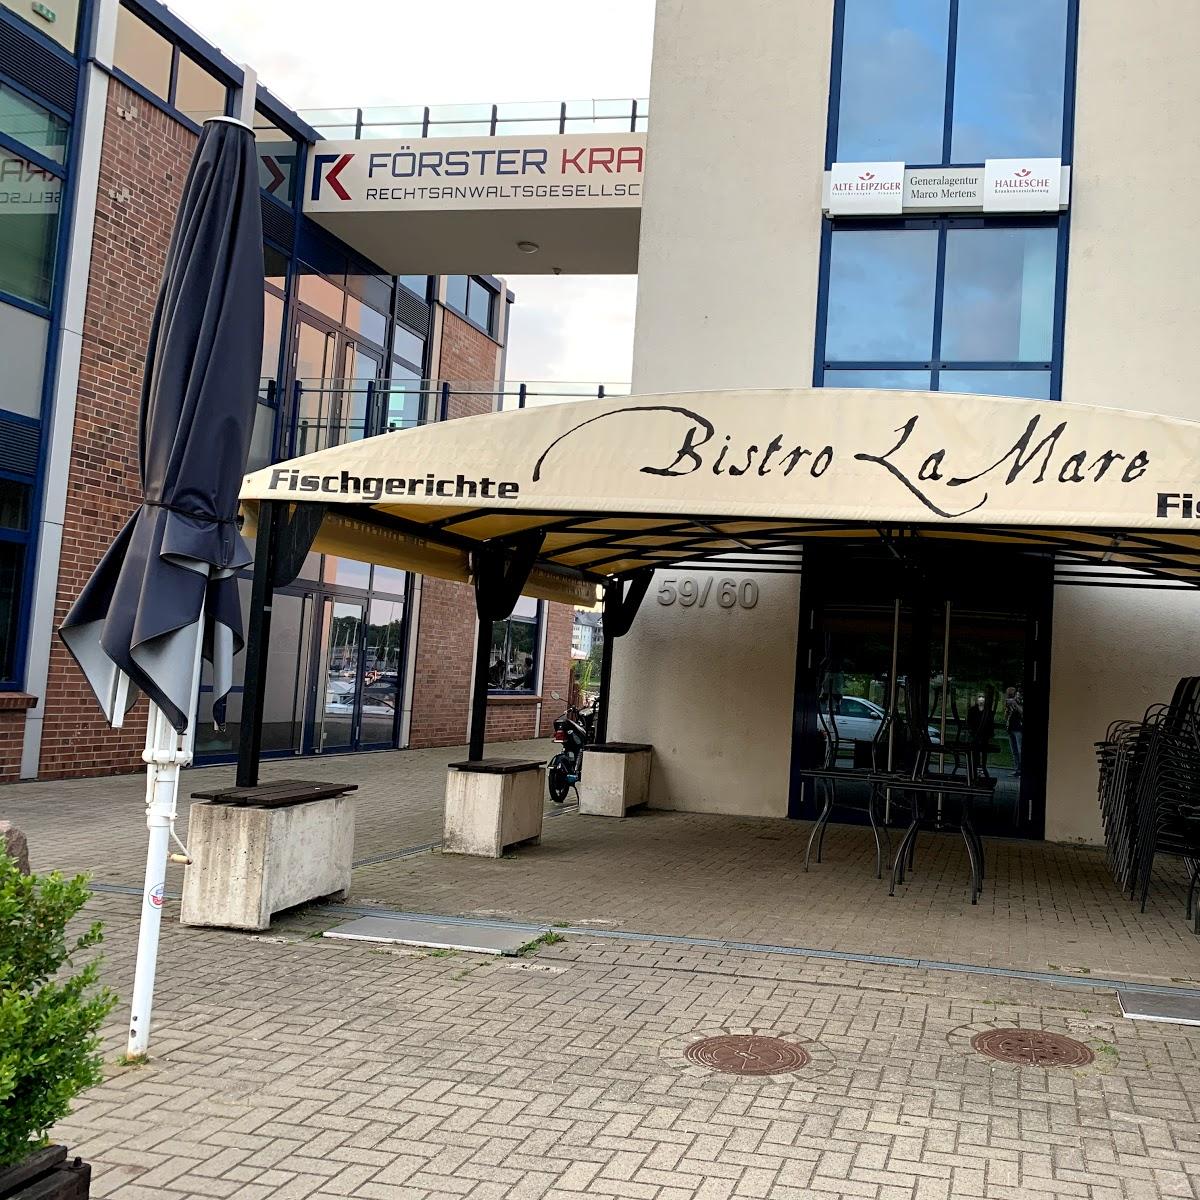 Restaurant "Bistro La Mare" in Rostock